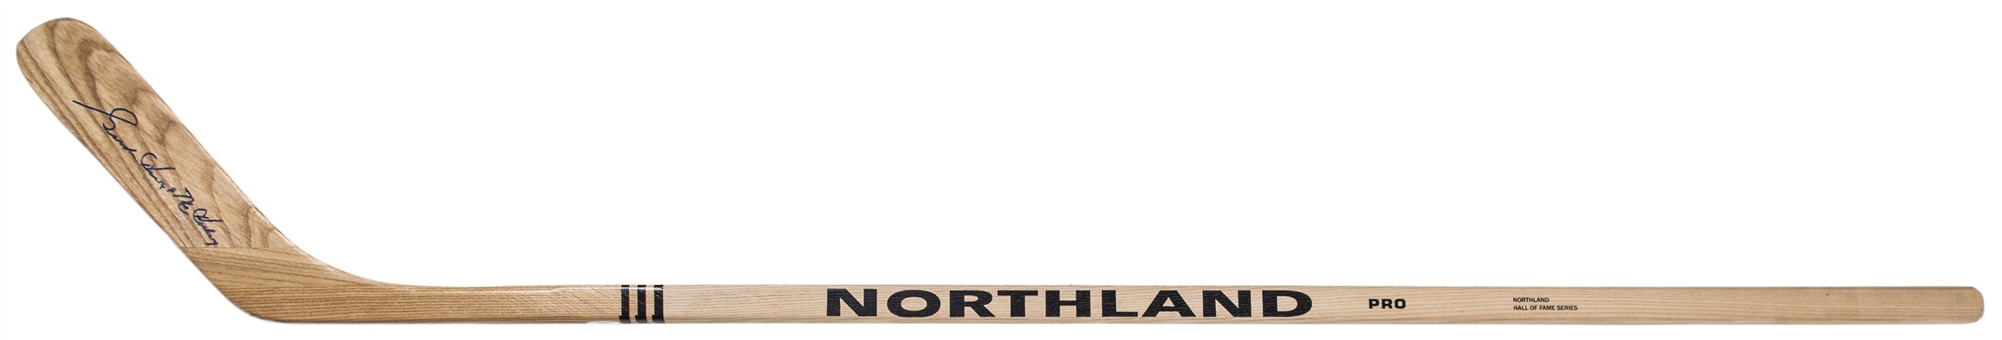 Gordie Howe Signed & "Mr. Hockey" Inscribed Northland Hockey Stick (JSA)